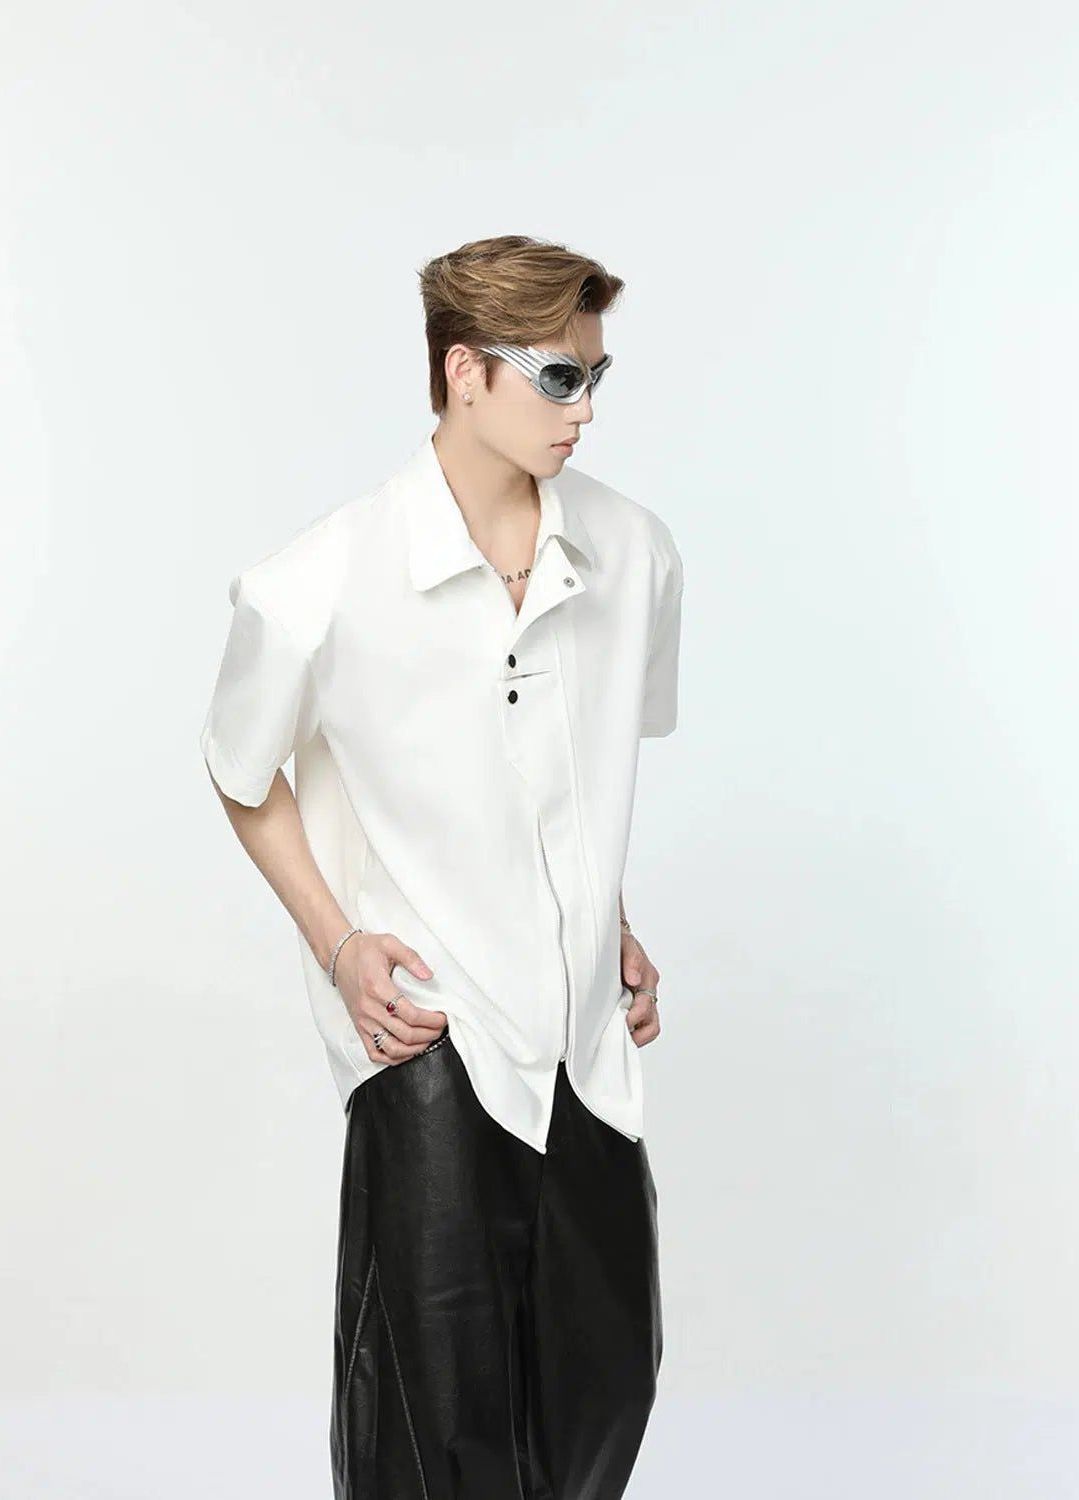 Metal Zipper Shoulder Pad Shirt Korean Street Fashion Shirt By Turn Tide Shop Online at OH Vault